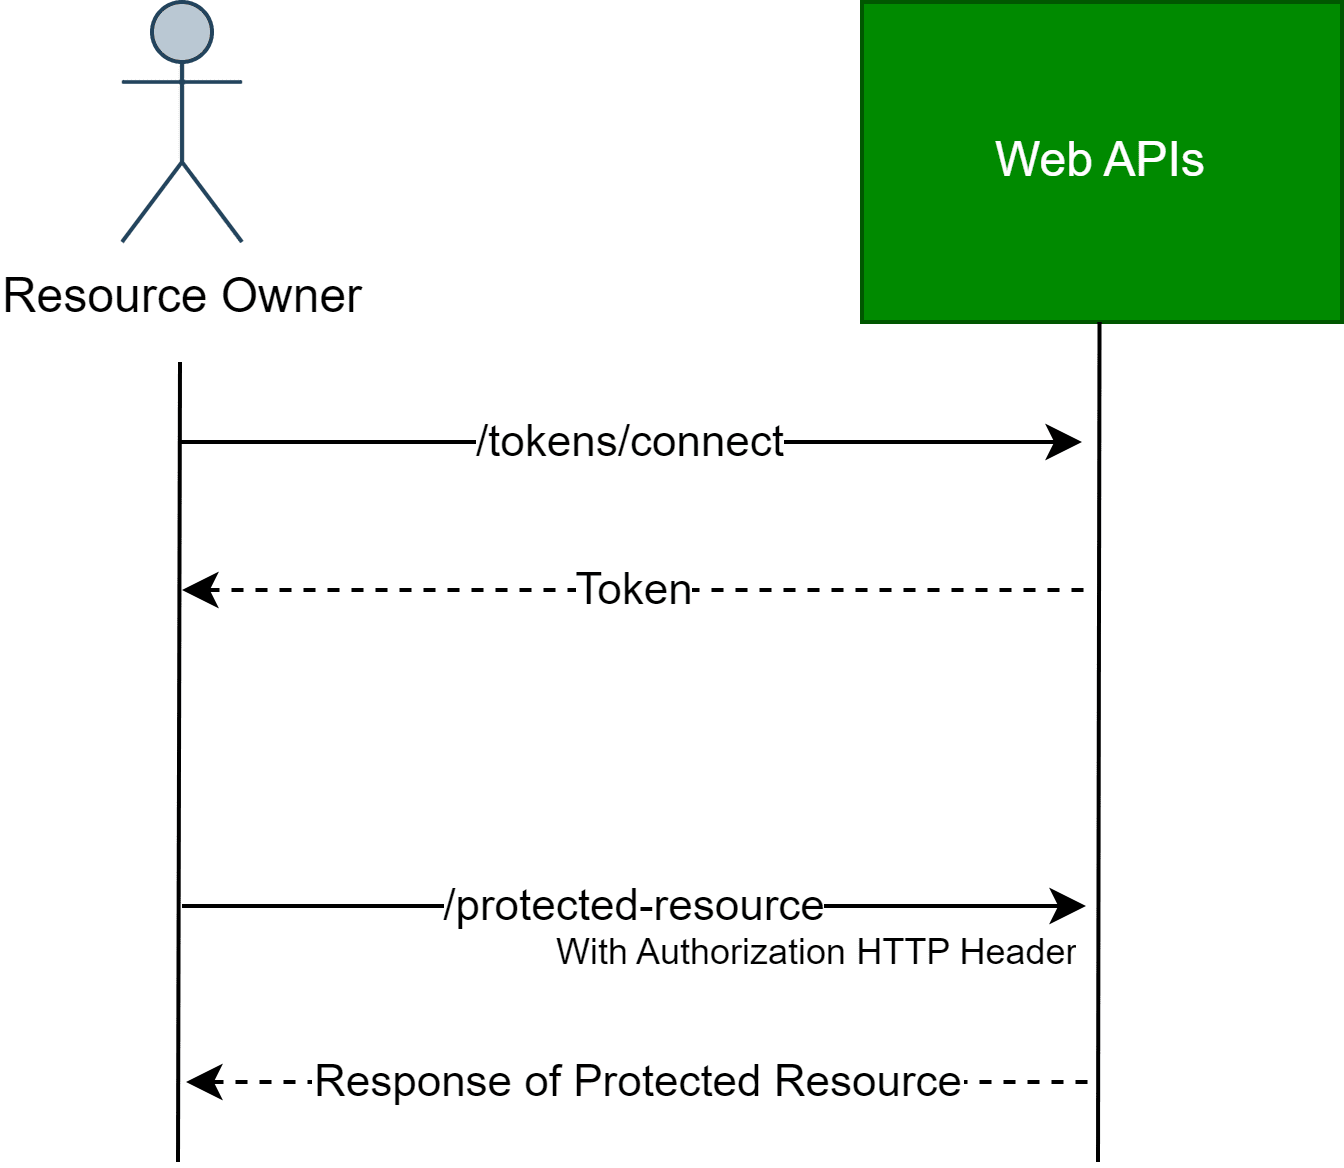 coinlog.fun Core Web Api - Using both BASIC and JWT Authentication - Microsoft Q&A